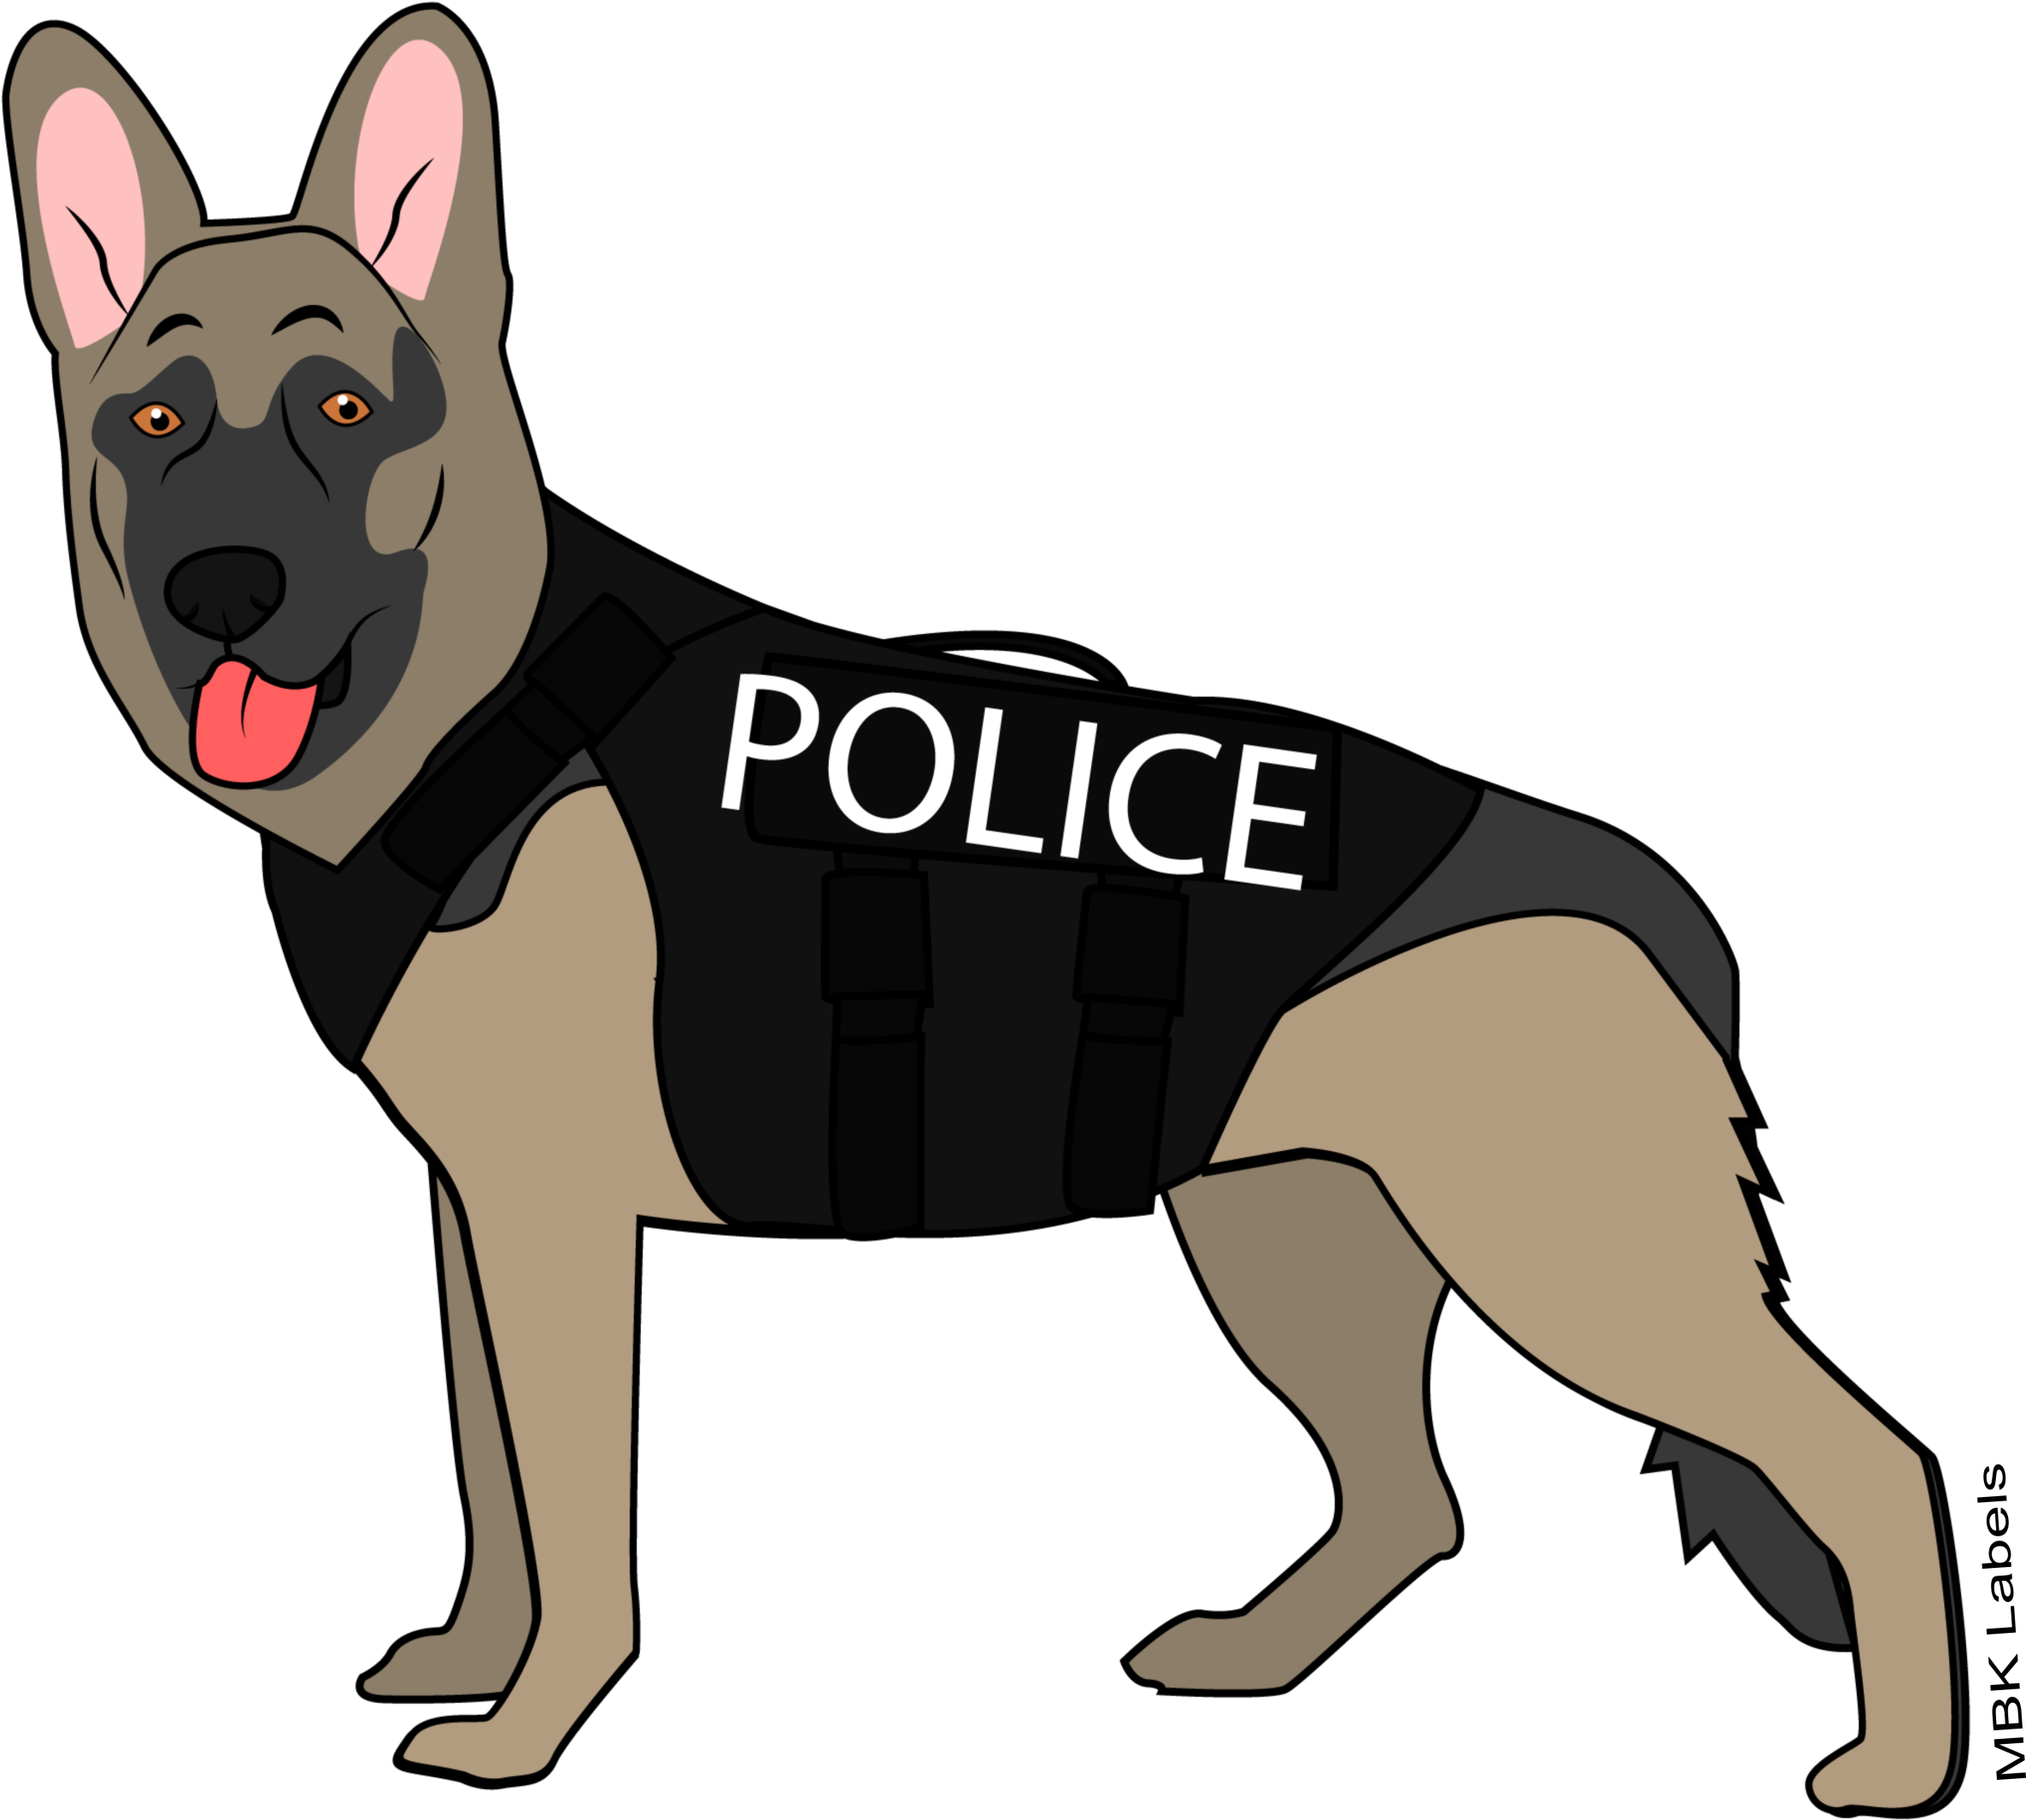 Police German Shepherd Dog PNG Image Background